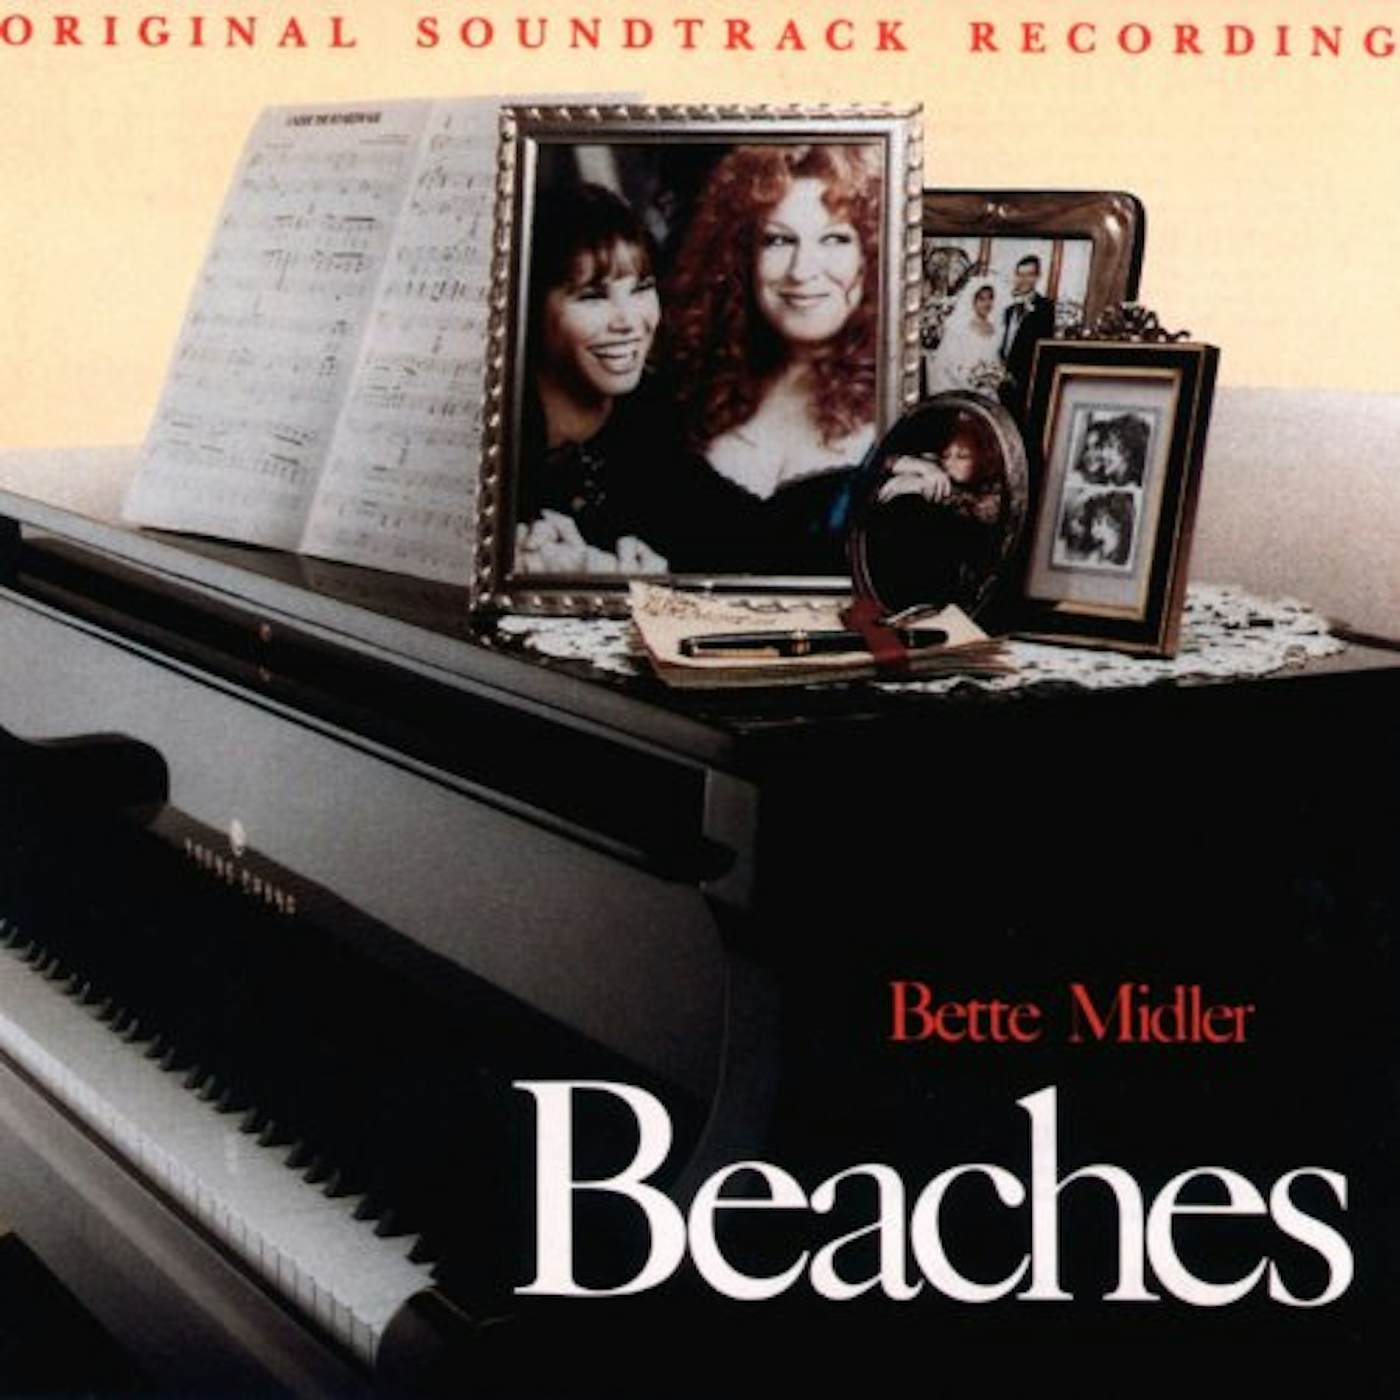 Bette Midler BEACHES Original Soundtrack Vinyl Record